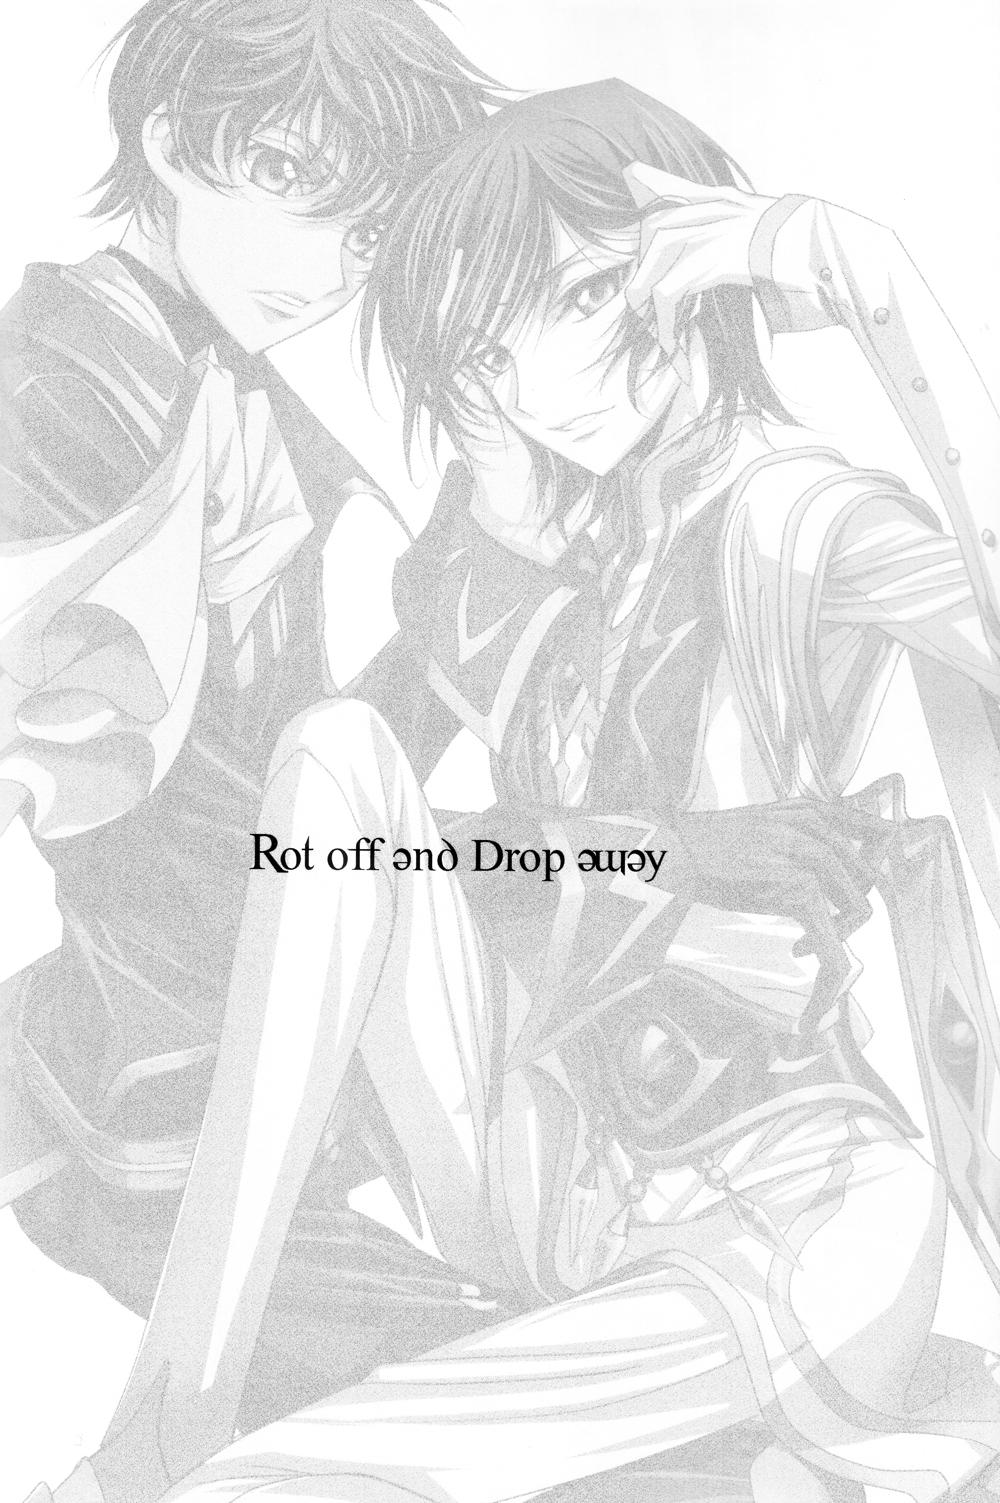 Kuchiru Chiru Ochiru - Rot off and Drop away 2